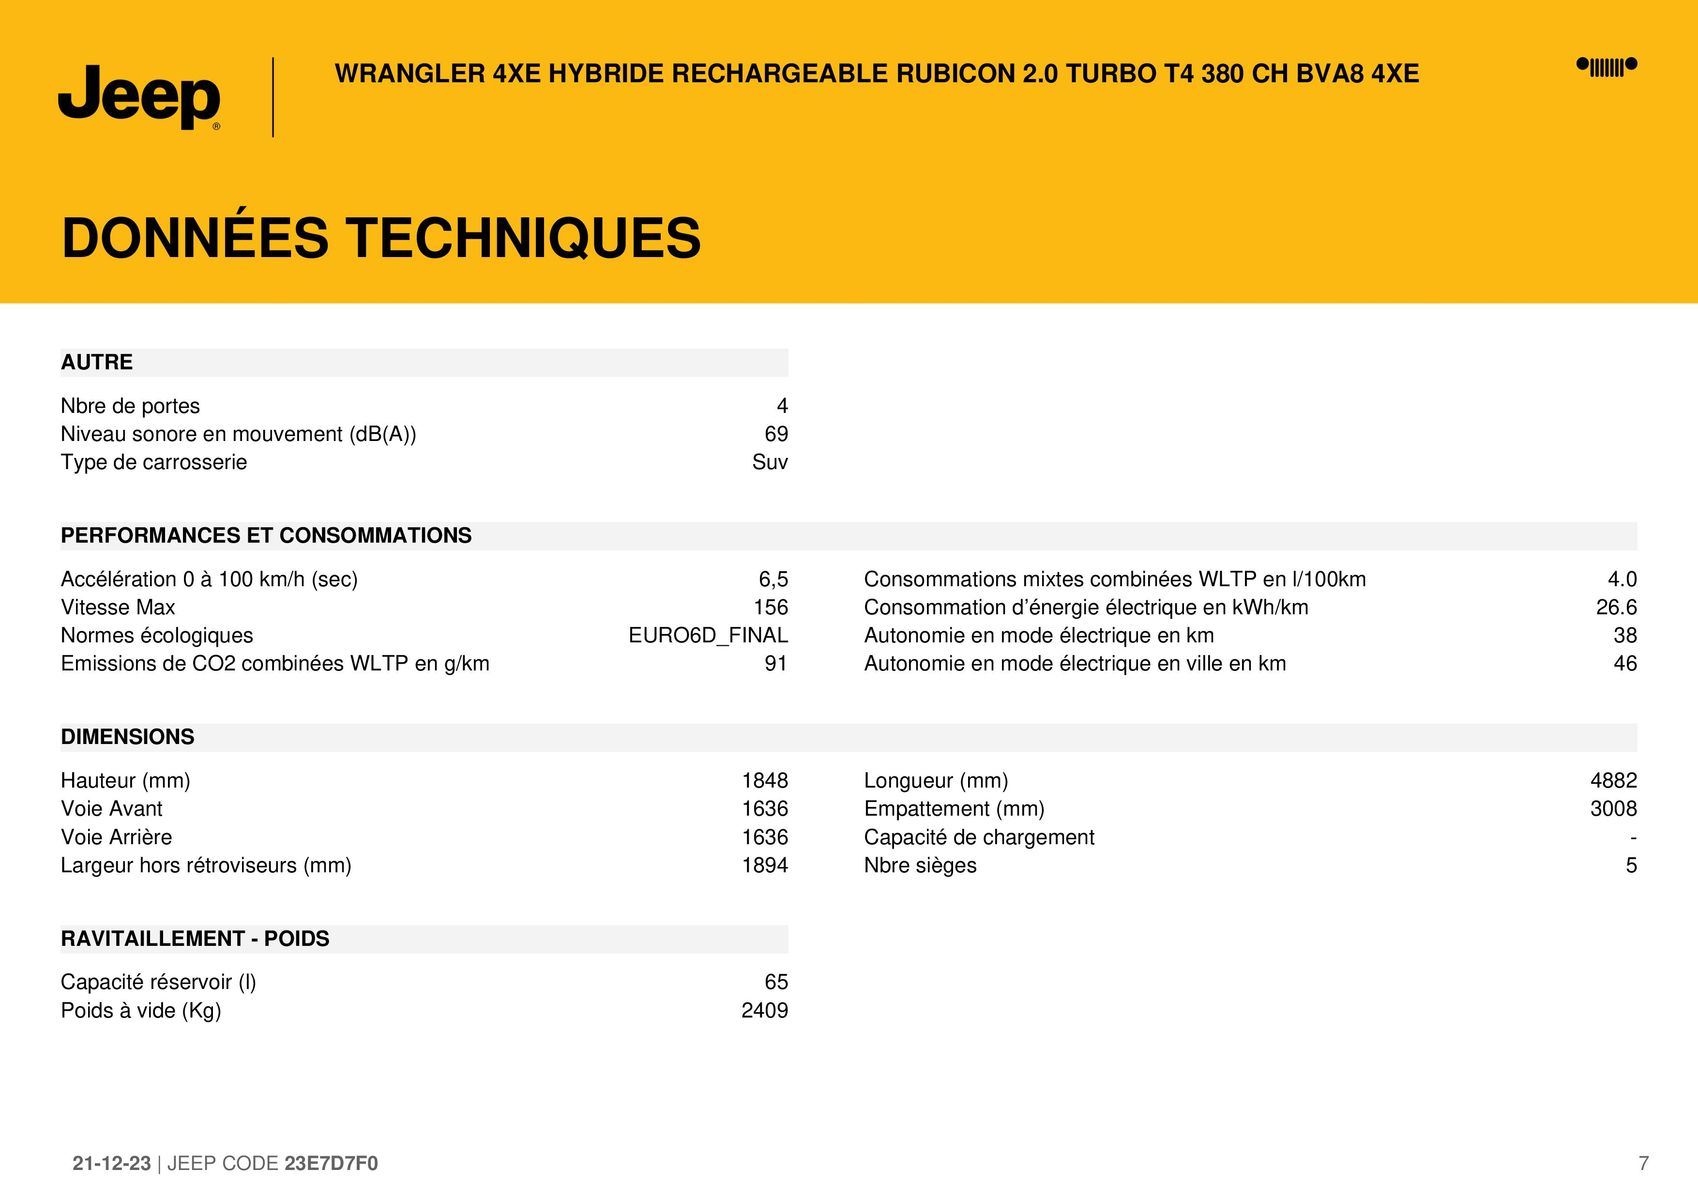 Catalogue WRANGLER 4XE HYBRIDE RECHARGEABLE RUBICON 2.0 TURBO T4 380 CH BVA8 4XE|, page 00007